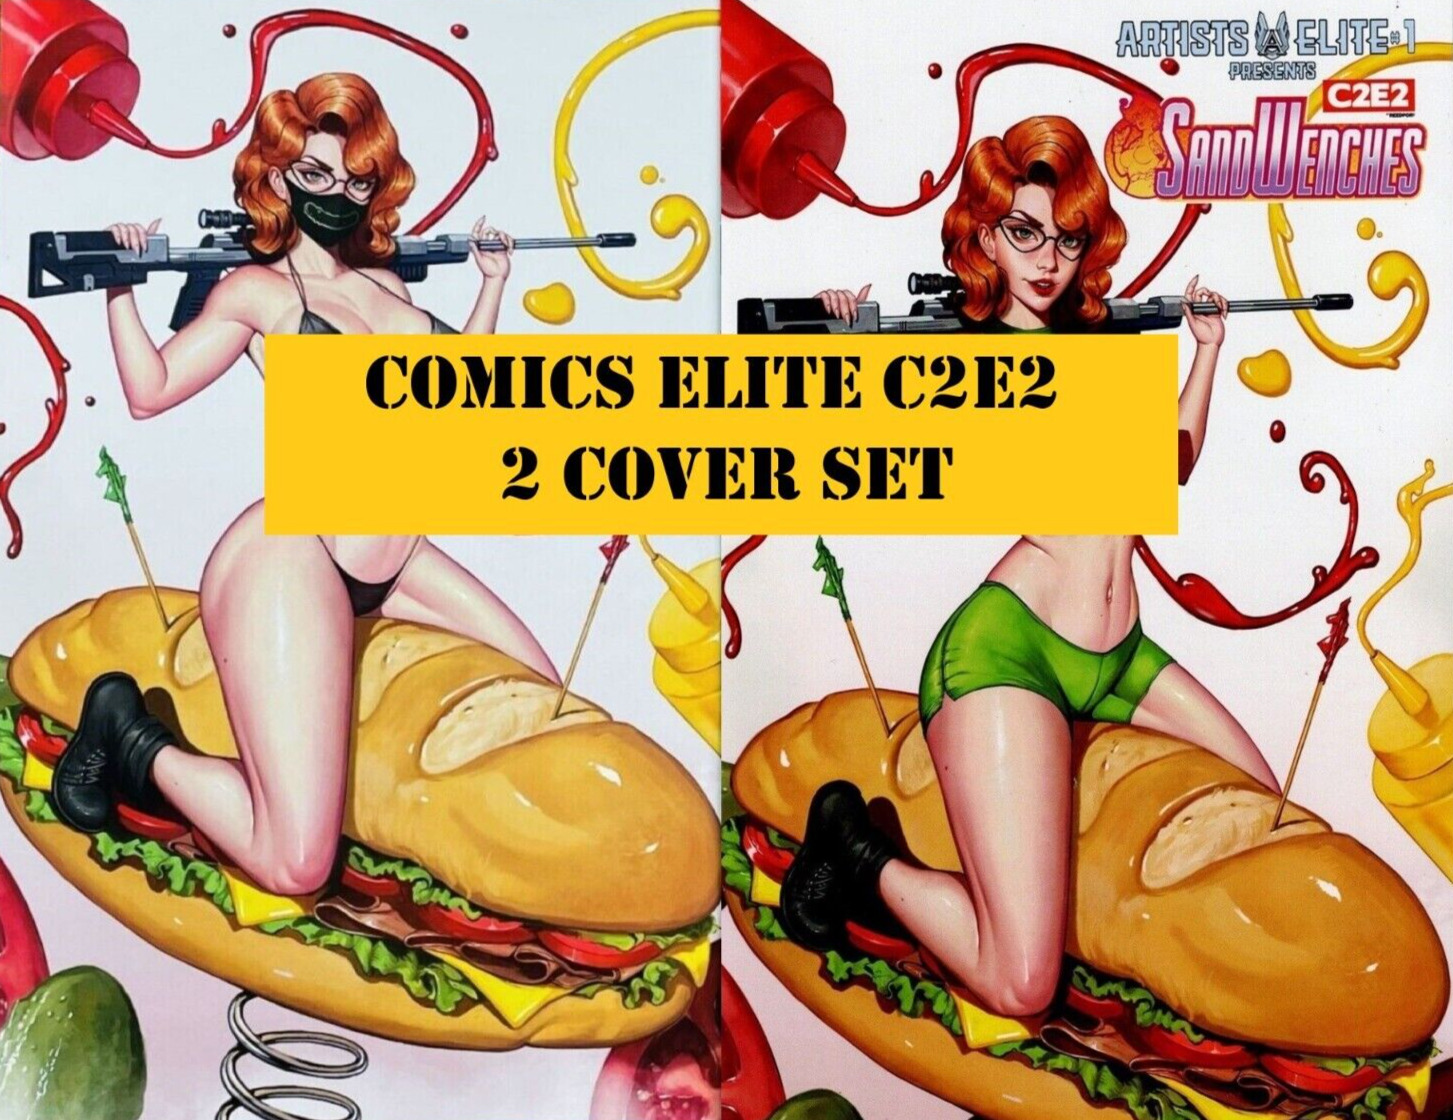 Artists Elite Presents #1 Sandwenches Dravacus C2E2 Comics Elite Cover Set 2022